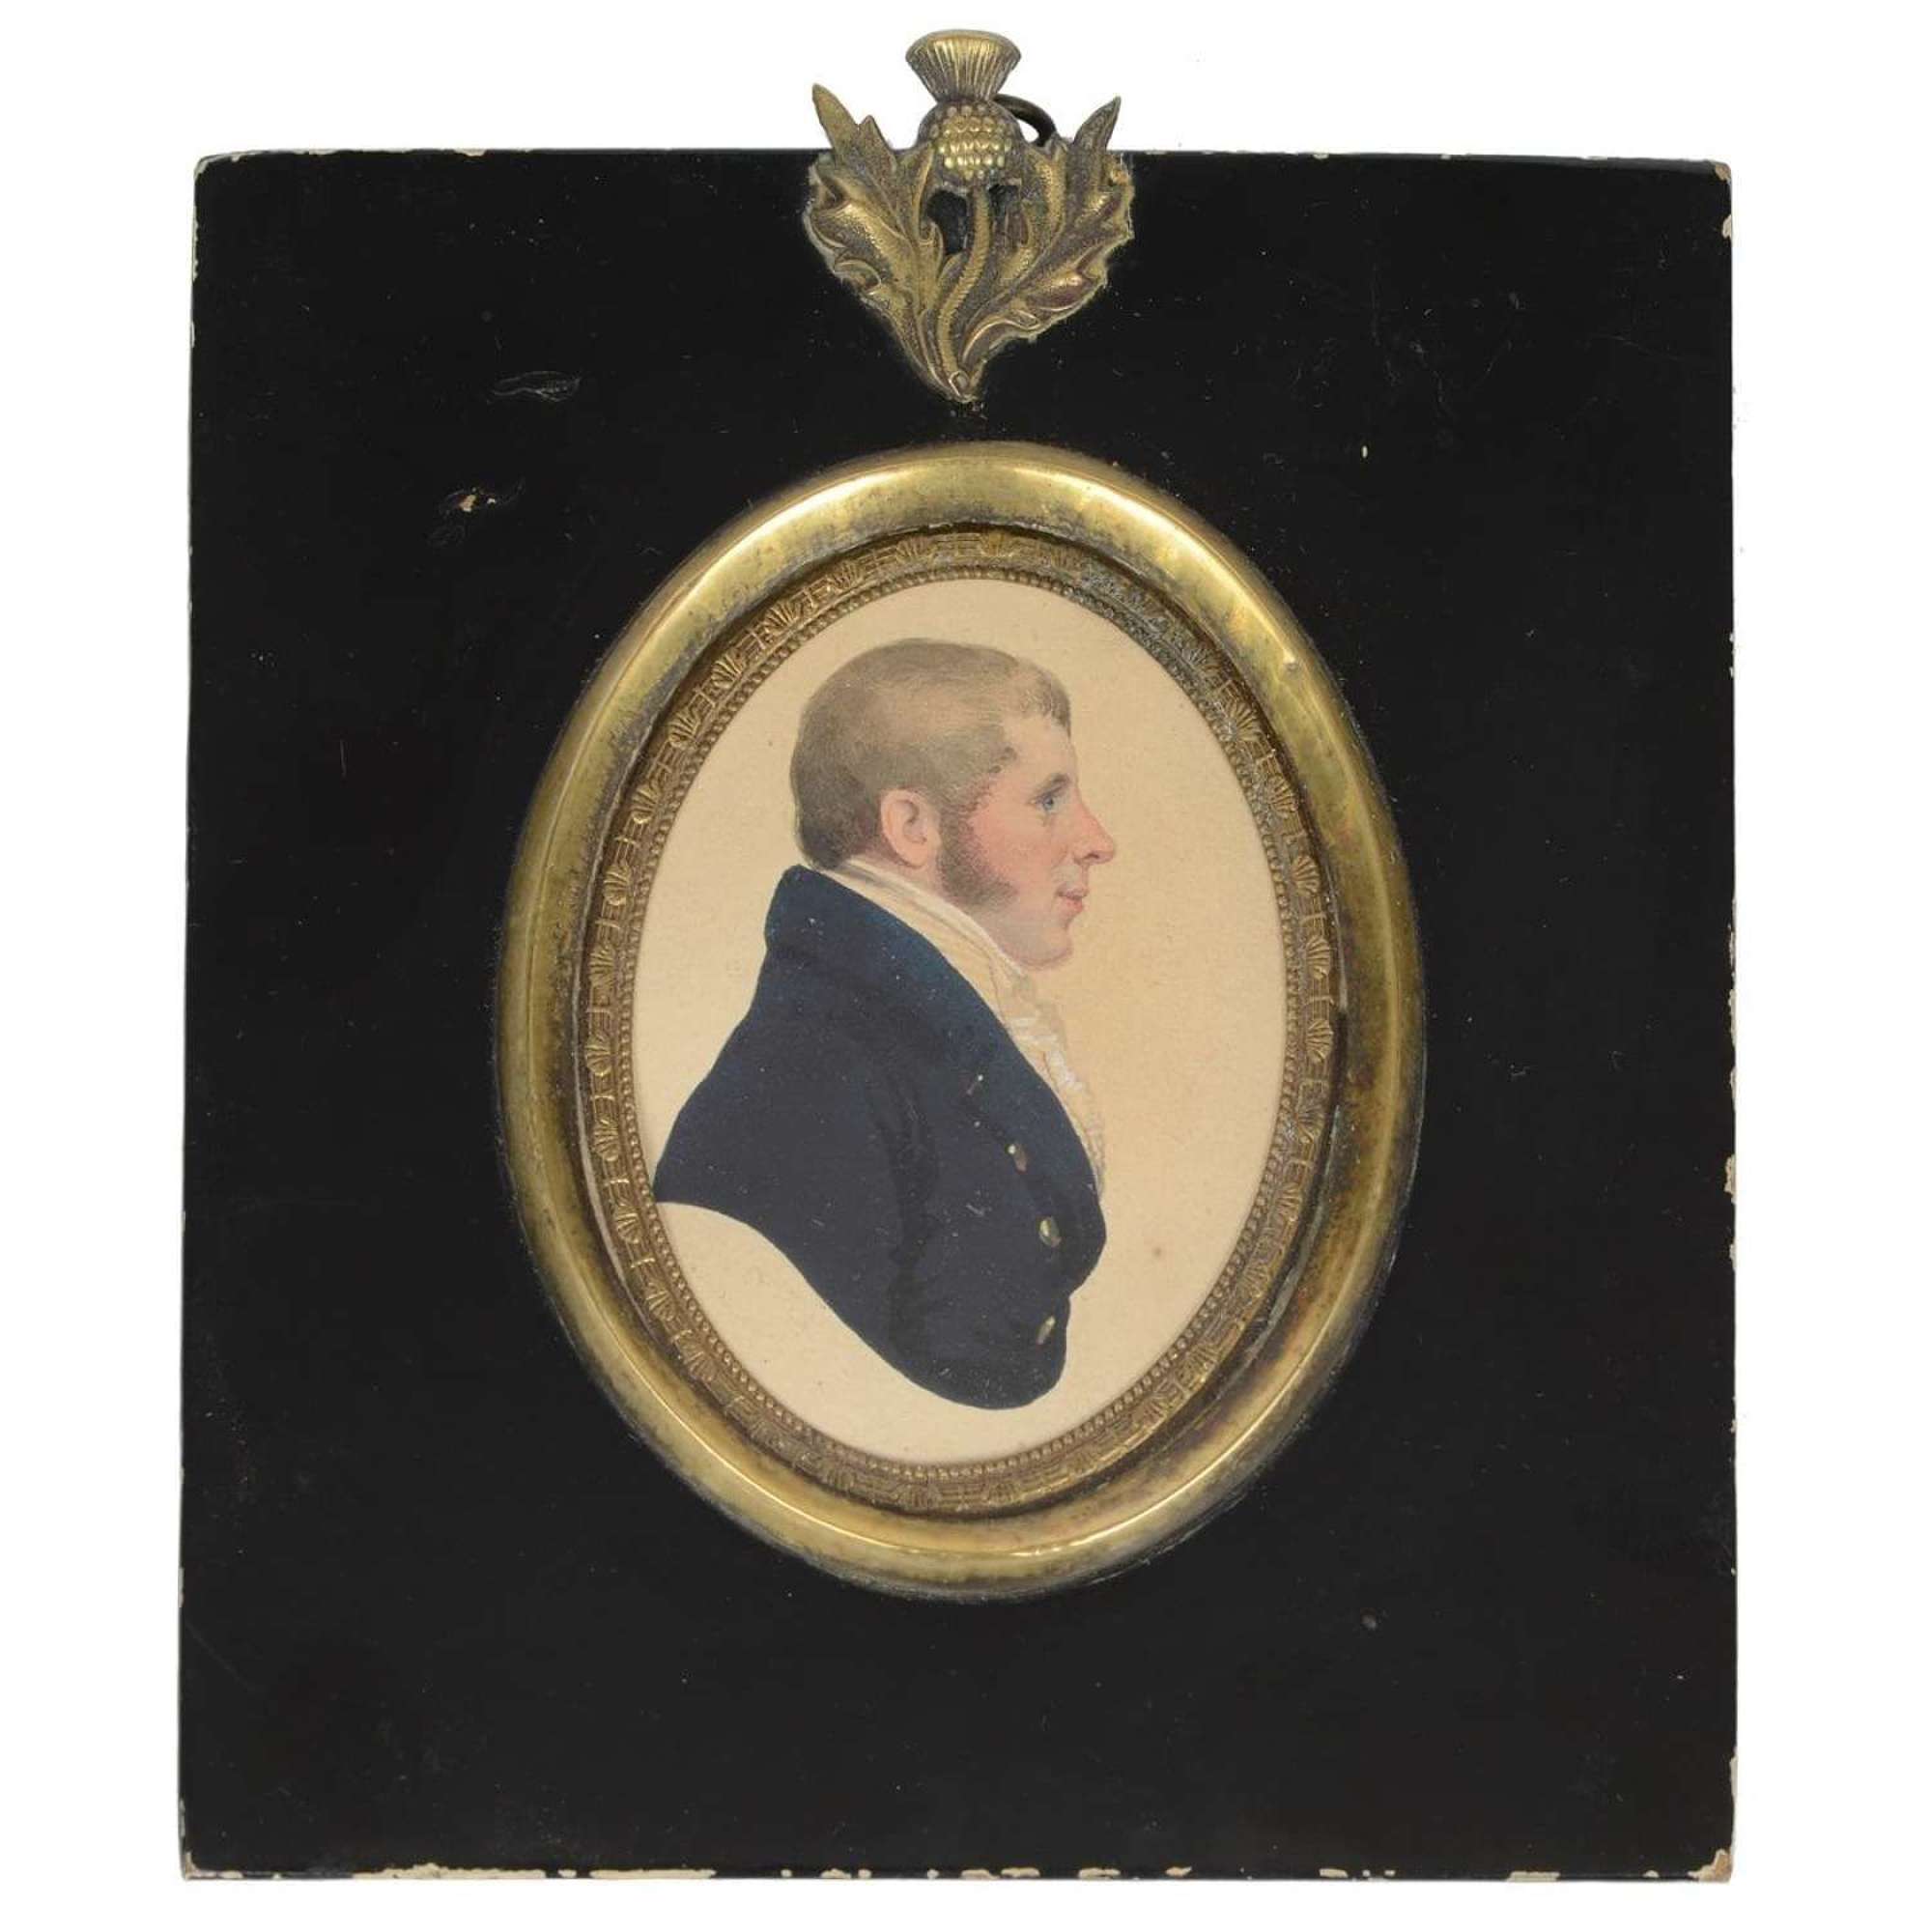 Scottish portrait miniature of a gentleman